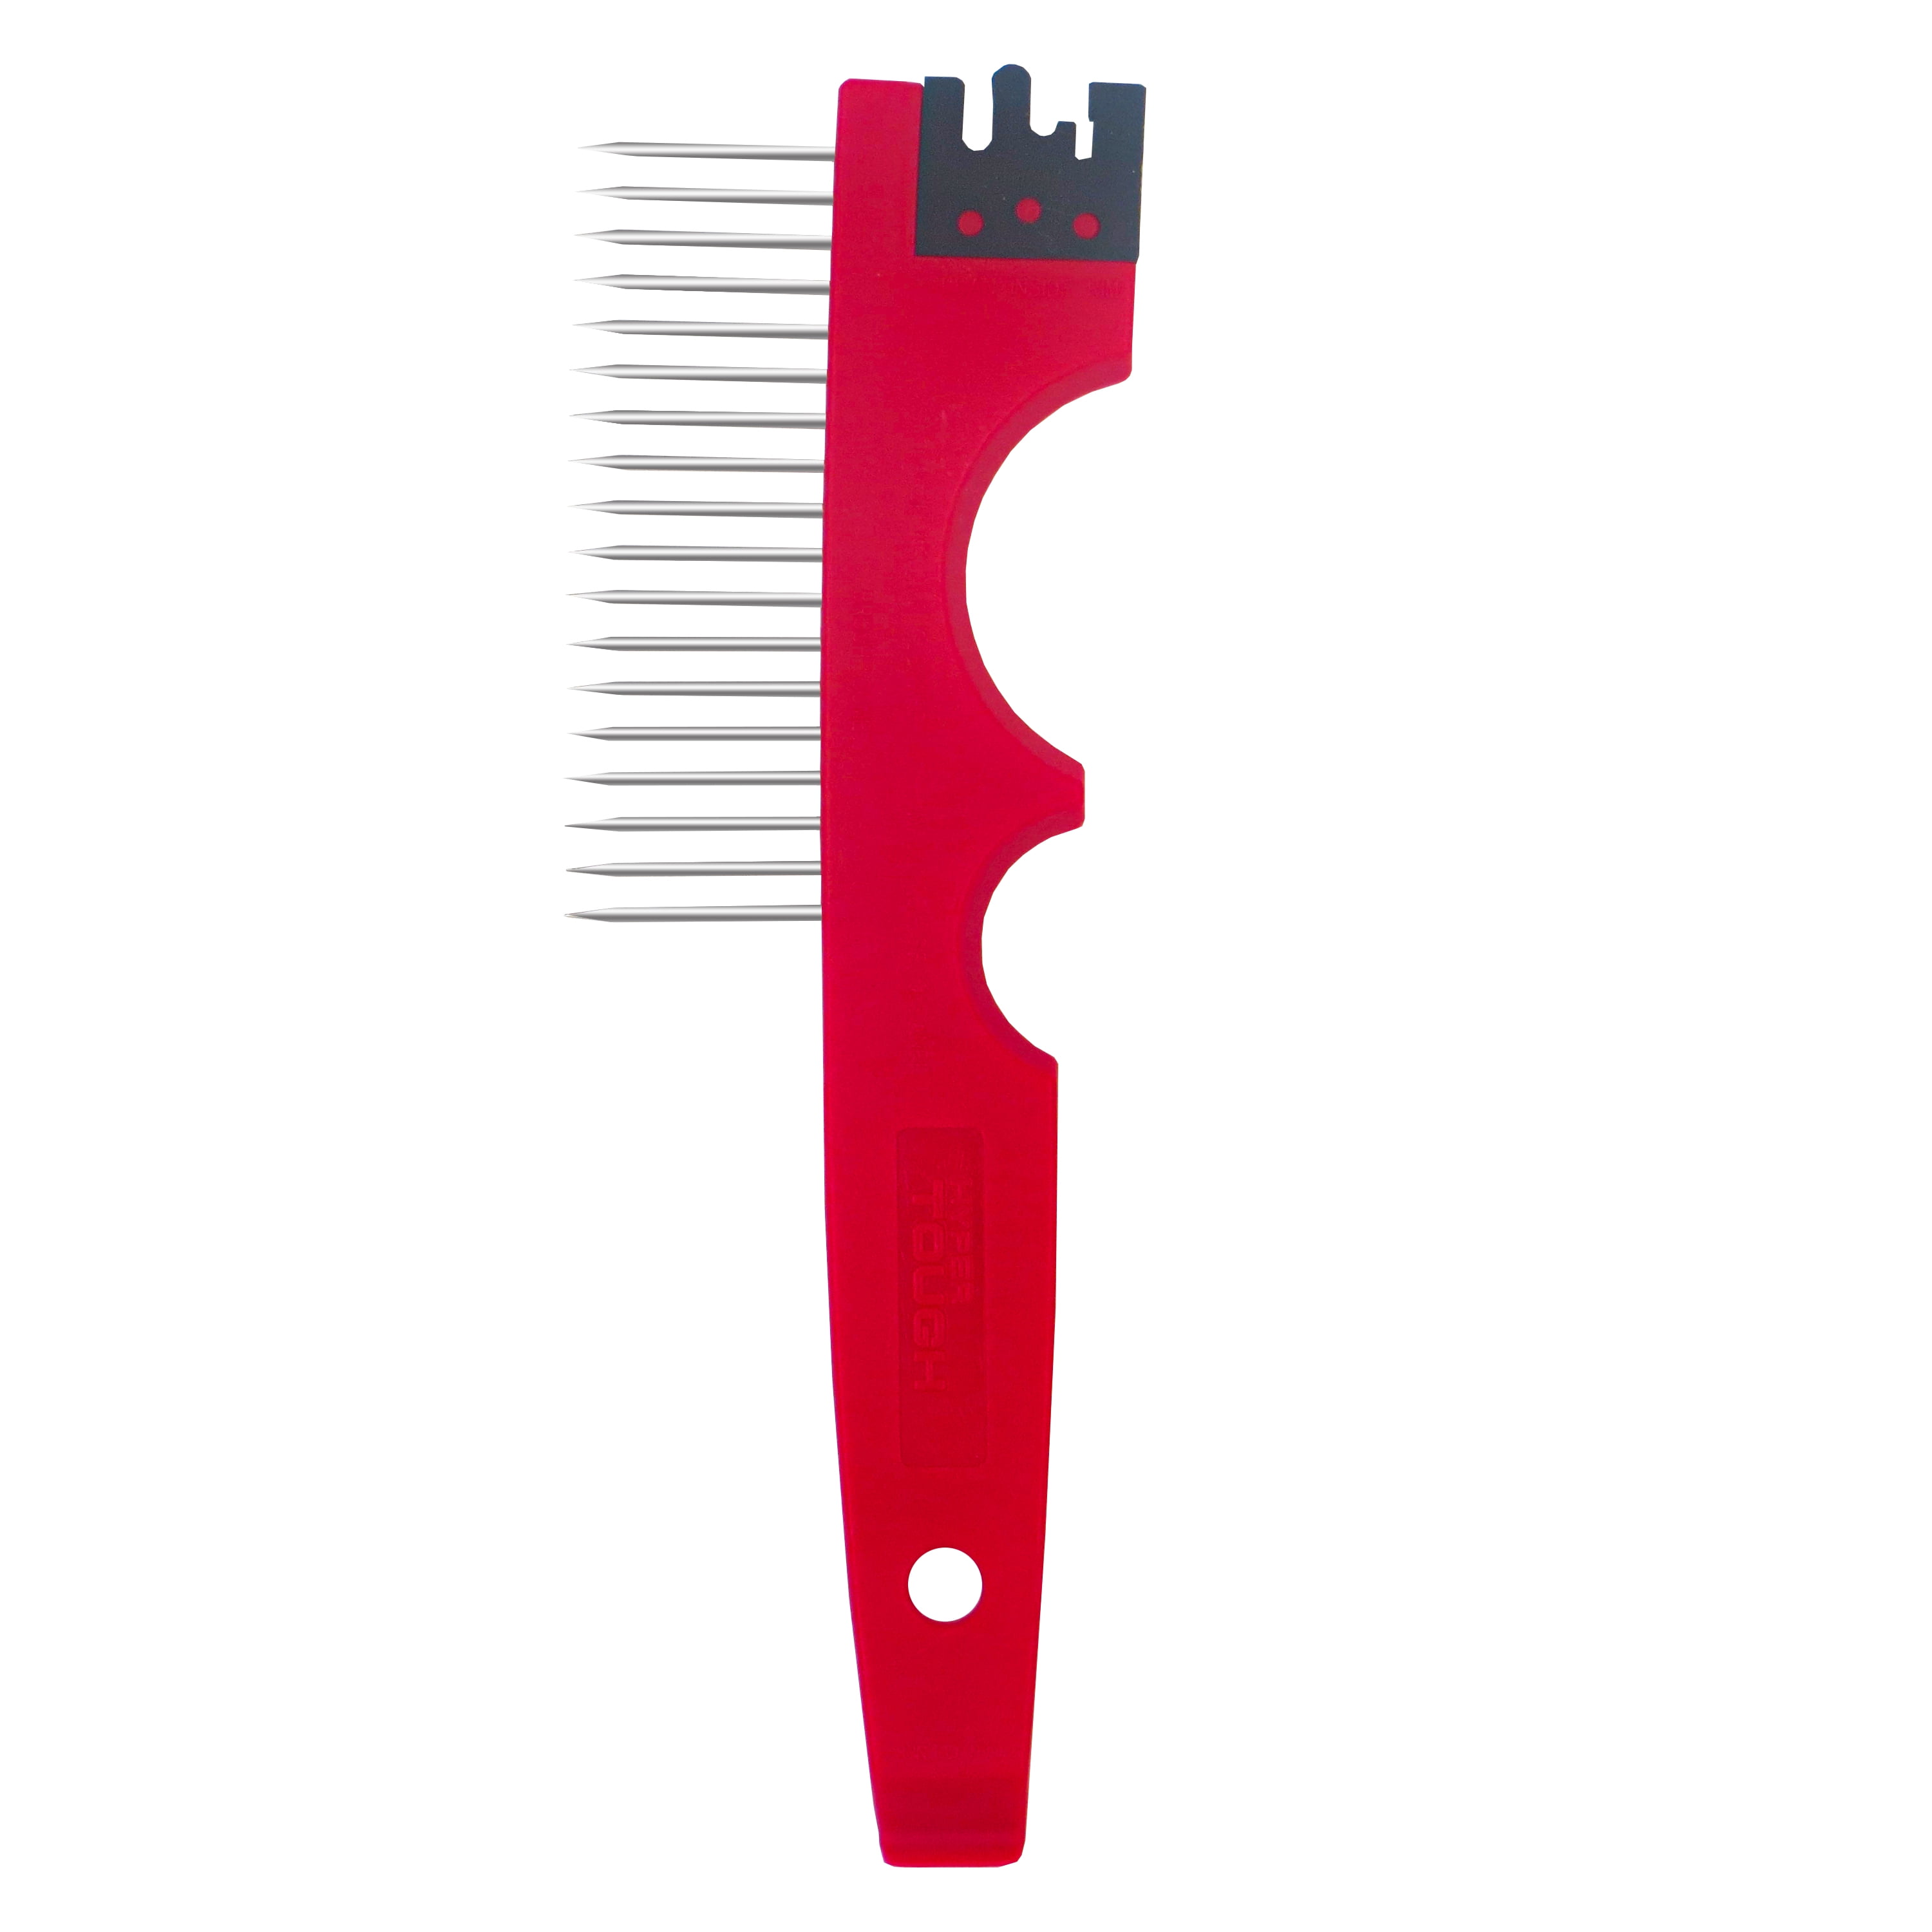 Basics 5-IN-1 Paint Brush Comb Tool